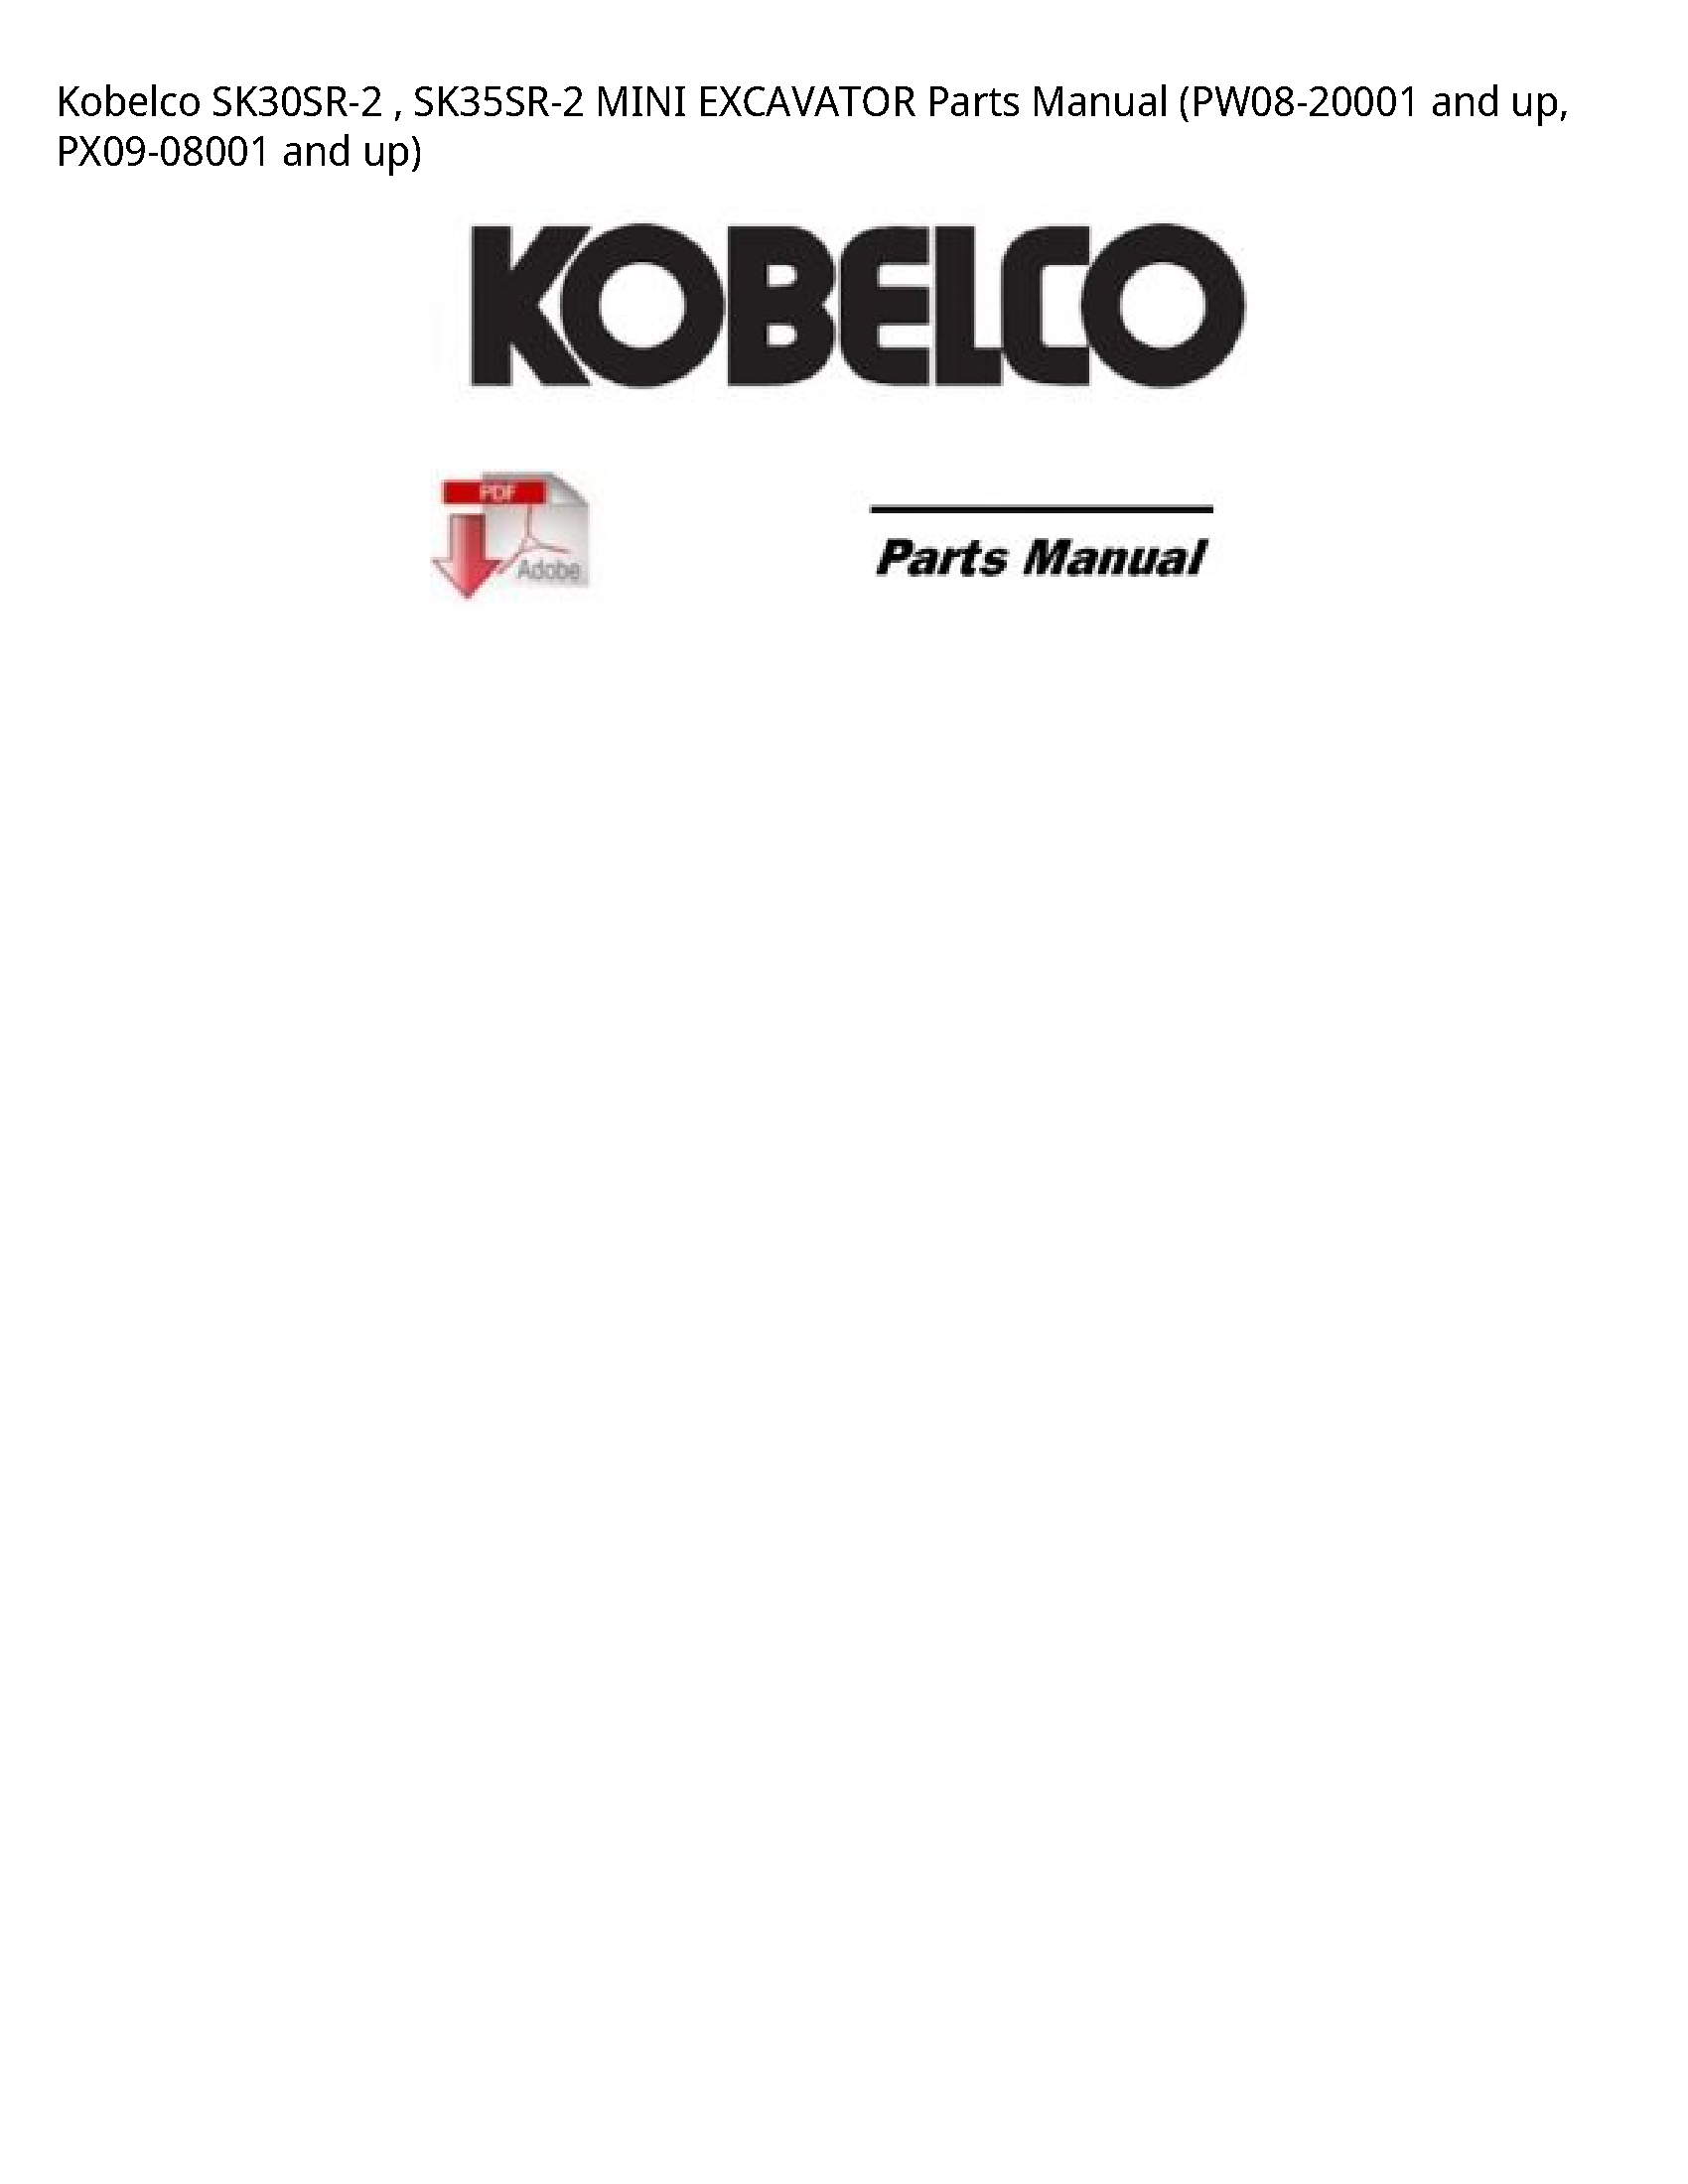 Kobelco SK30SR-2 MINI EXCAVATOR Parts manual